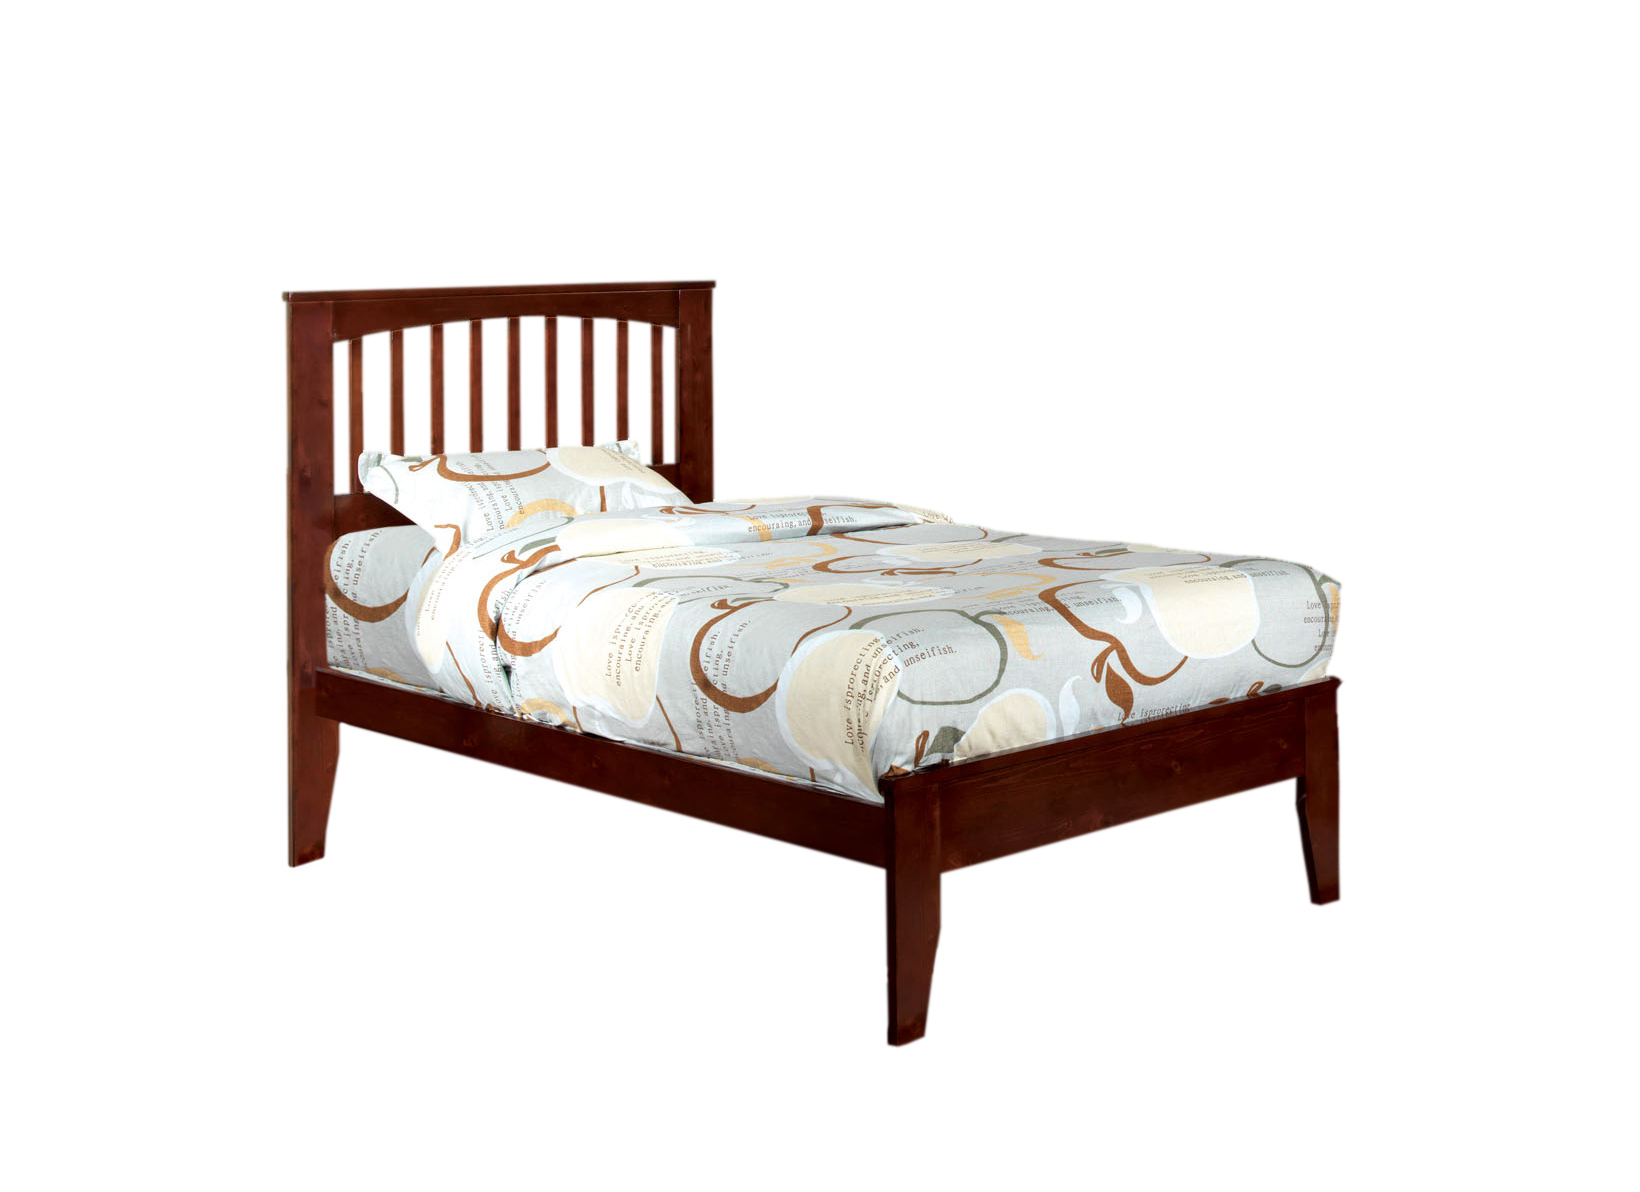 Furniture of America Callie Mission Style Platform Bed